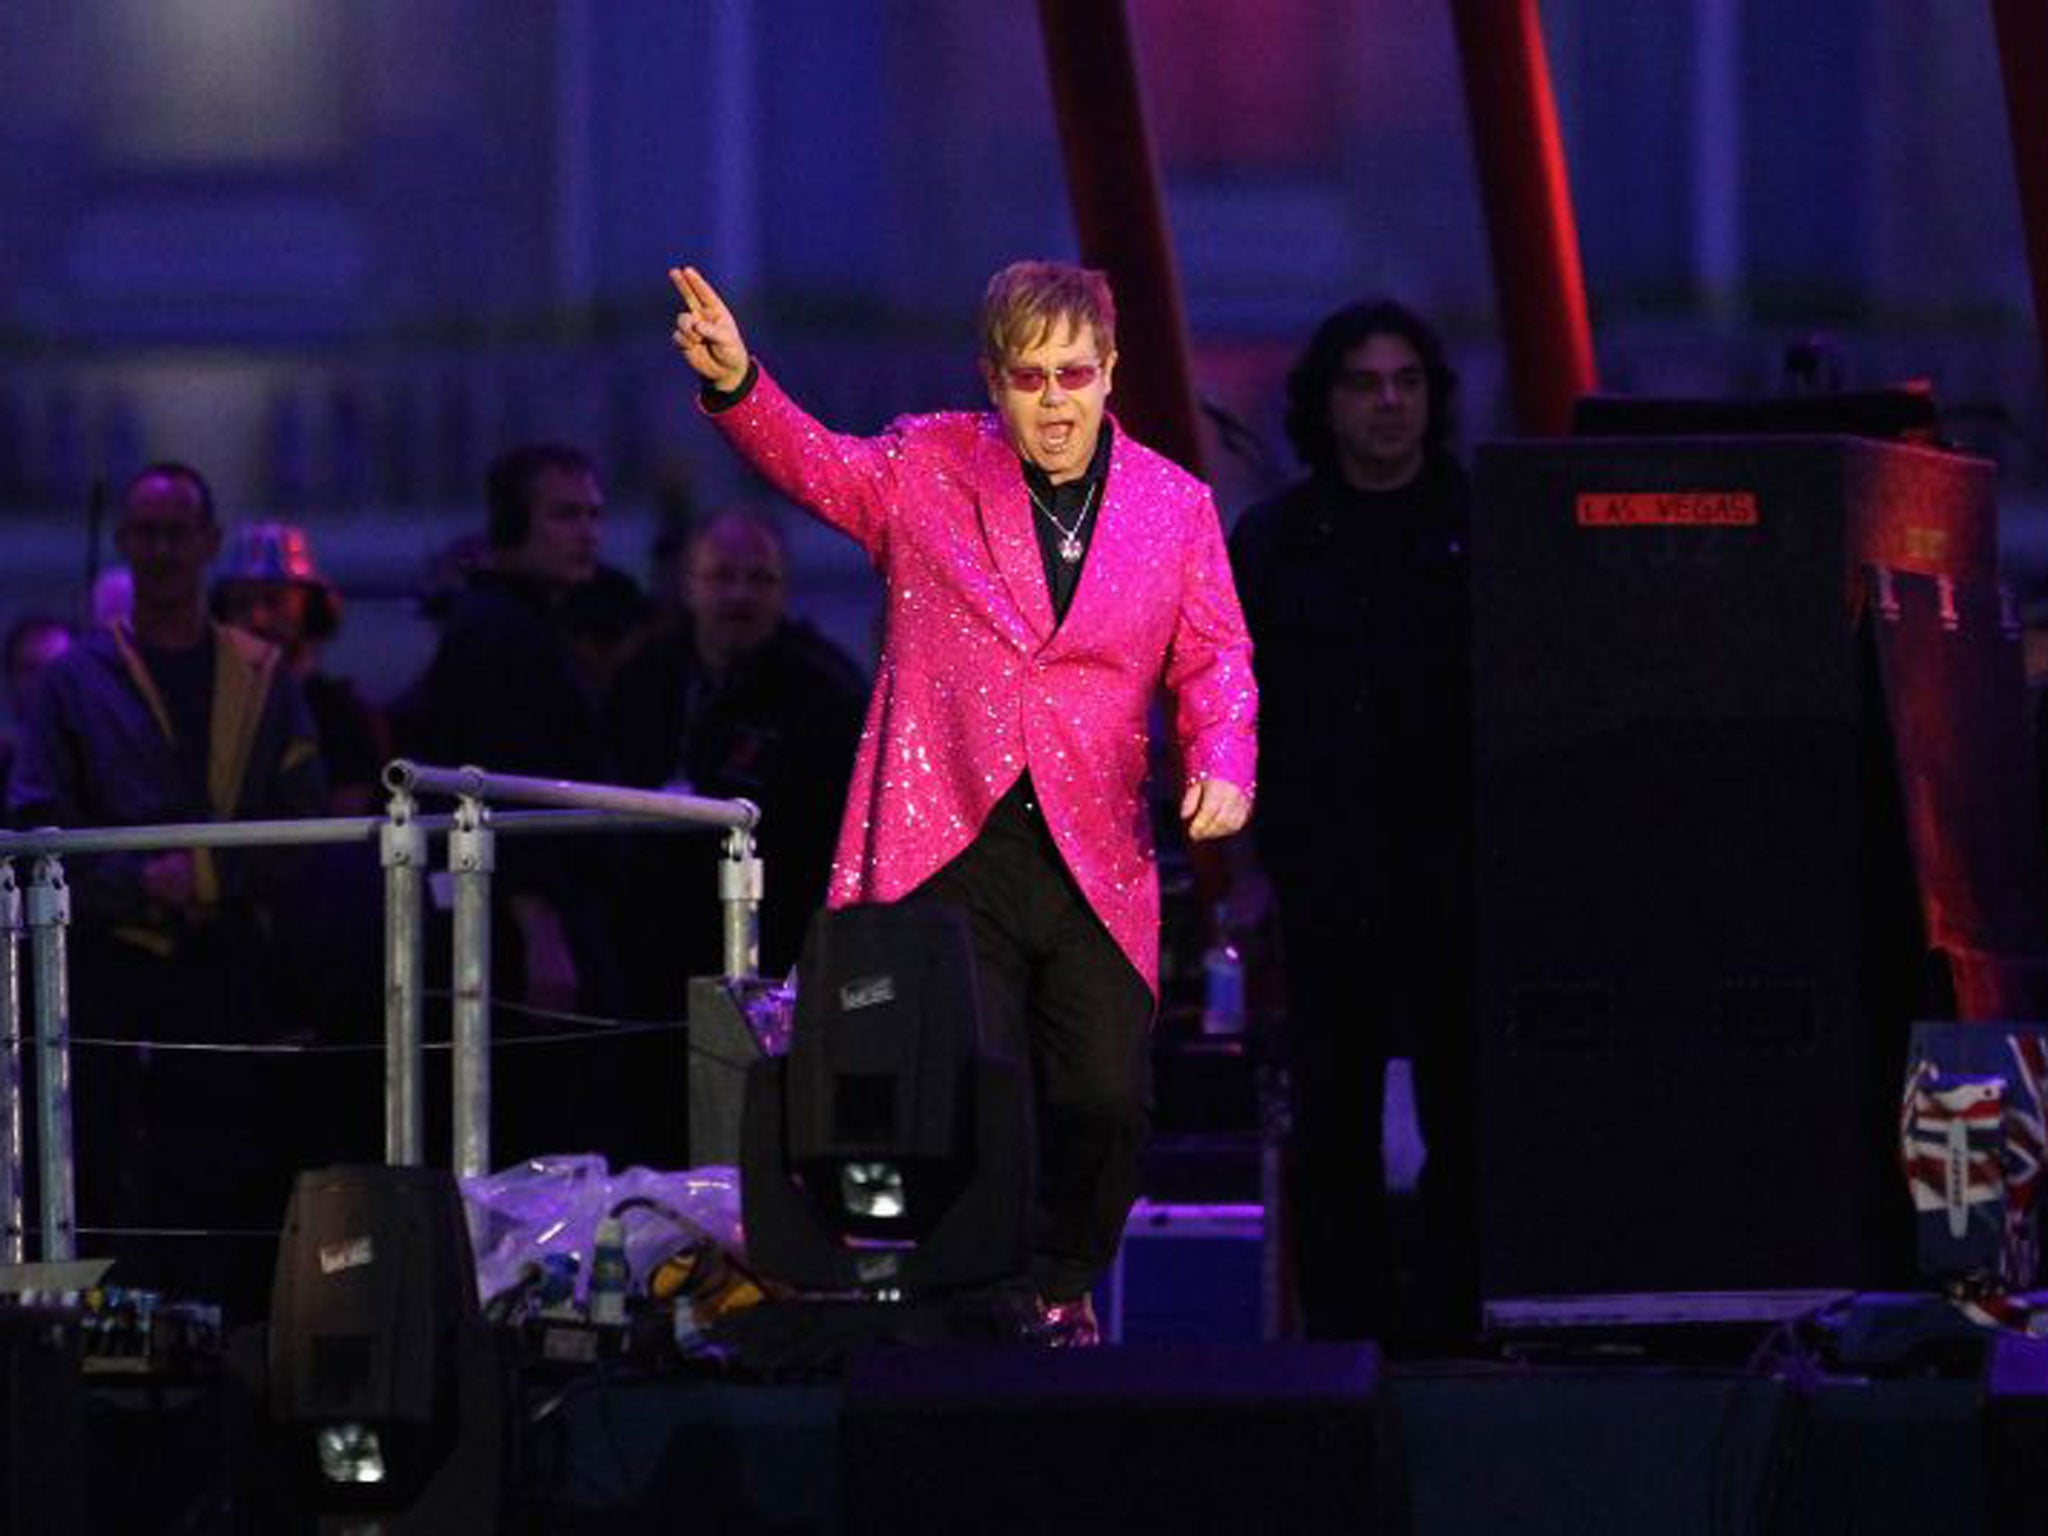 Singer Sir Elton John performing on stage during the Diamond Jubilee concert at Buckingham Palace last year